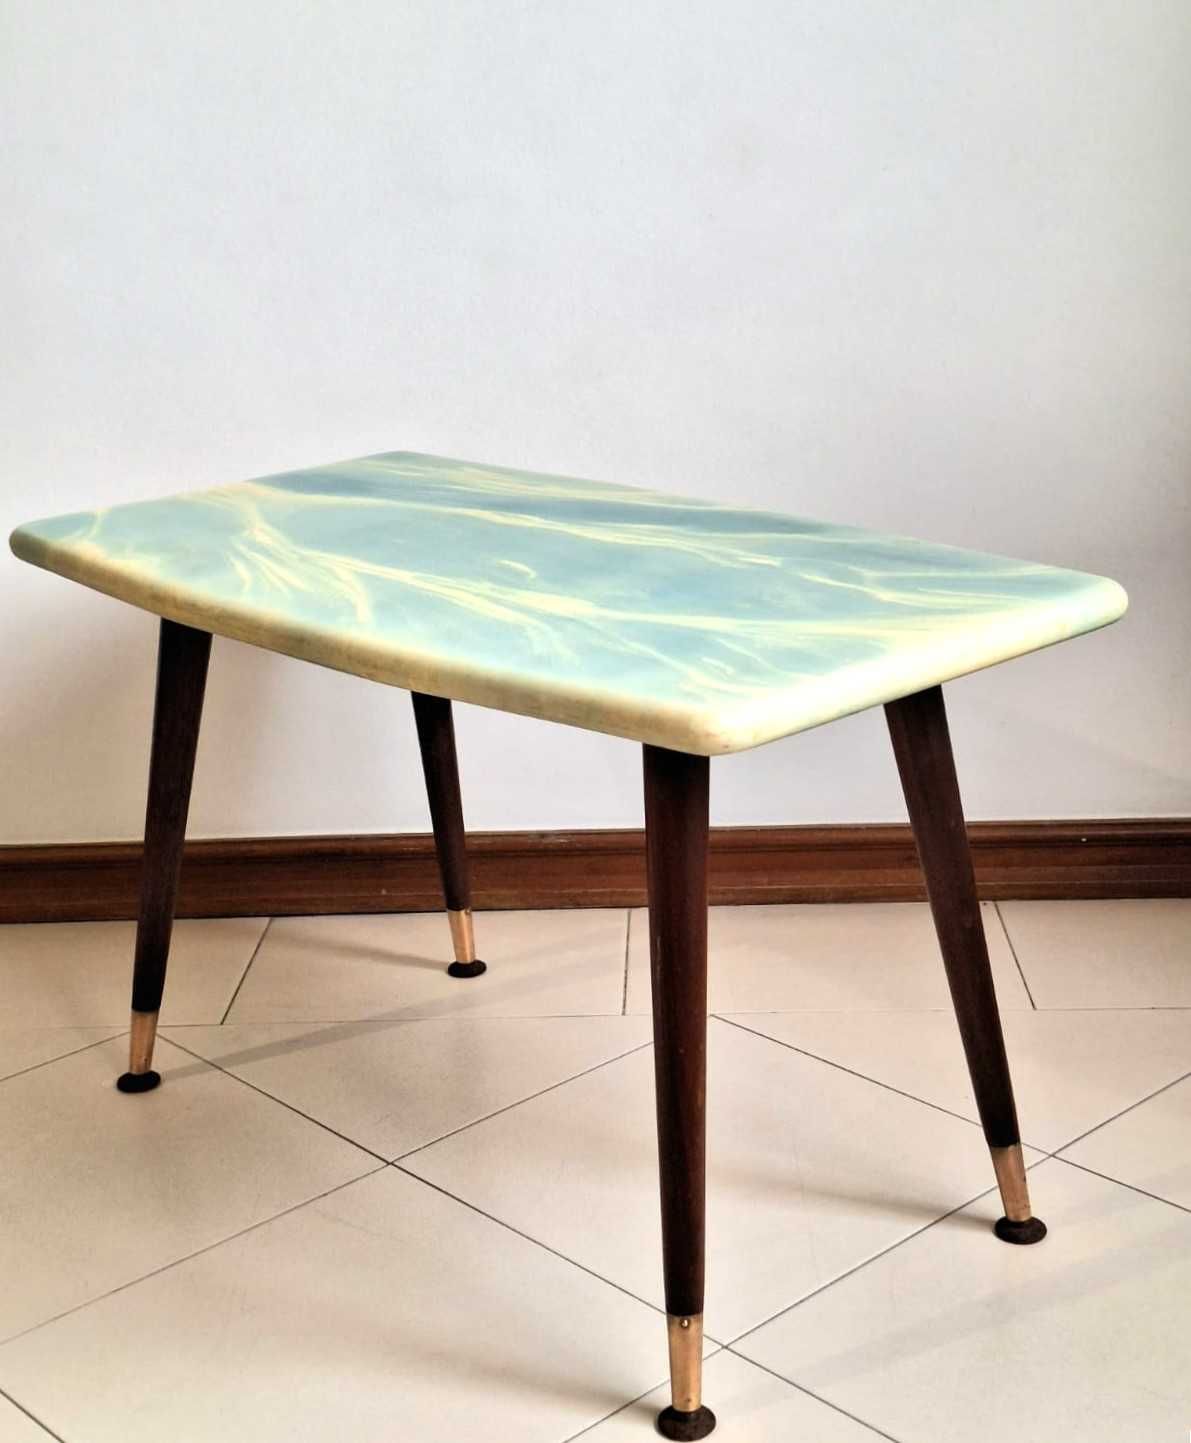 MESA DE CENTRO DE RESINA VINTAGE - Vintage resin coffee table